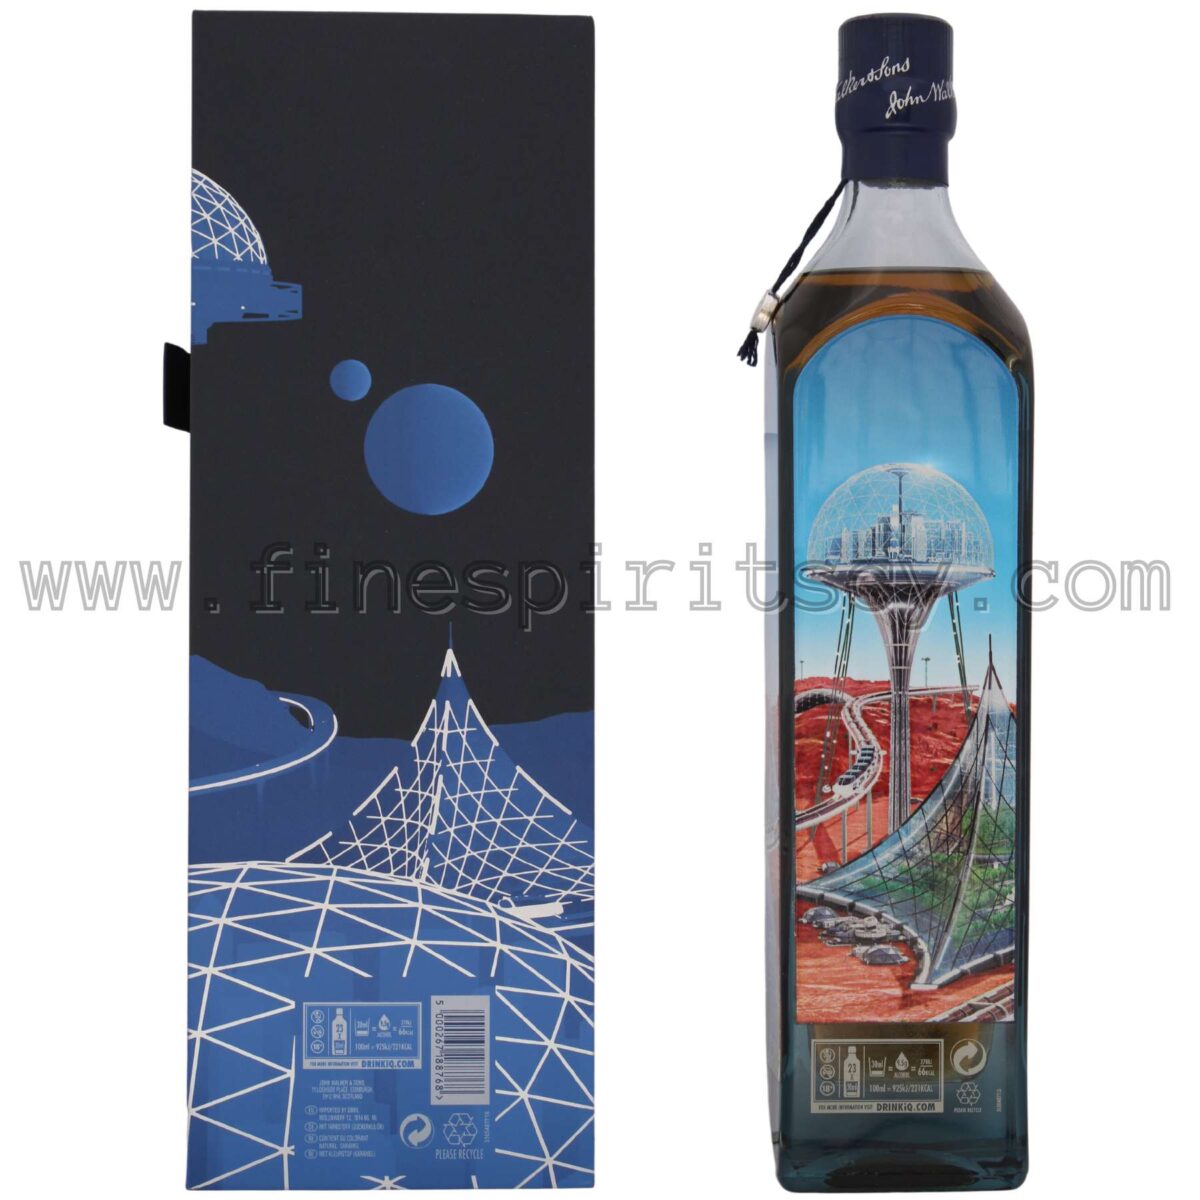 JW Blue Label City X Mars Box 2220 Cities Back Bottle Design Cyprus Online Order